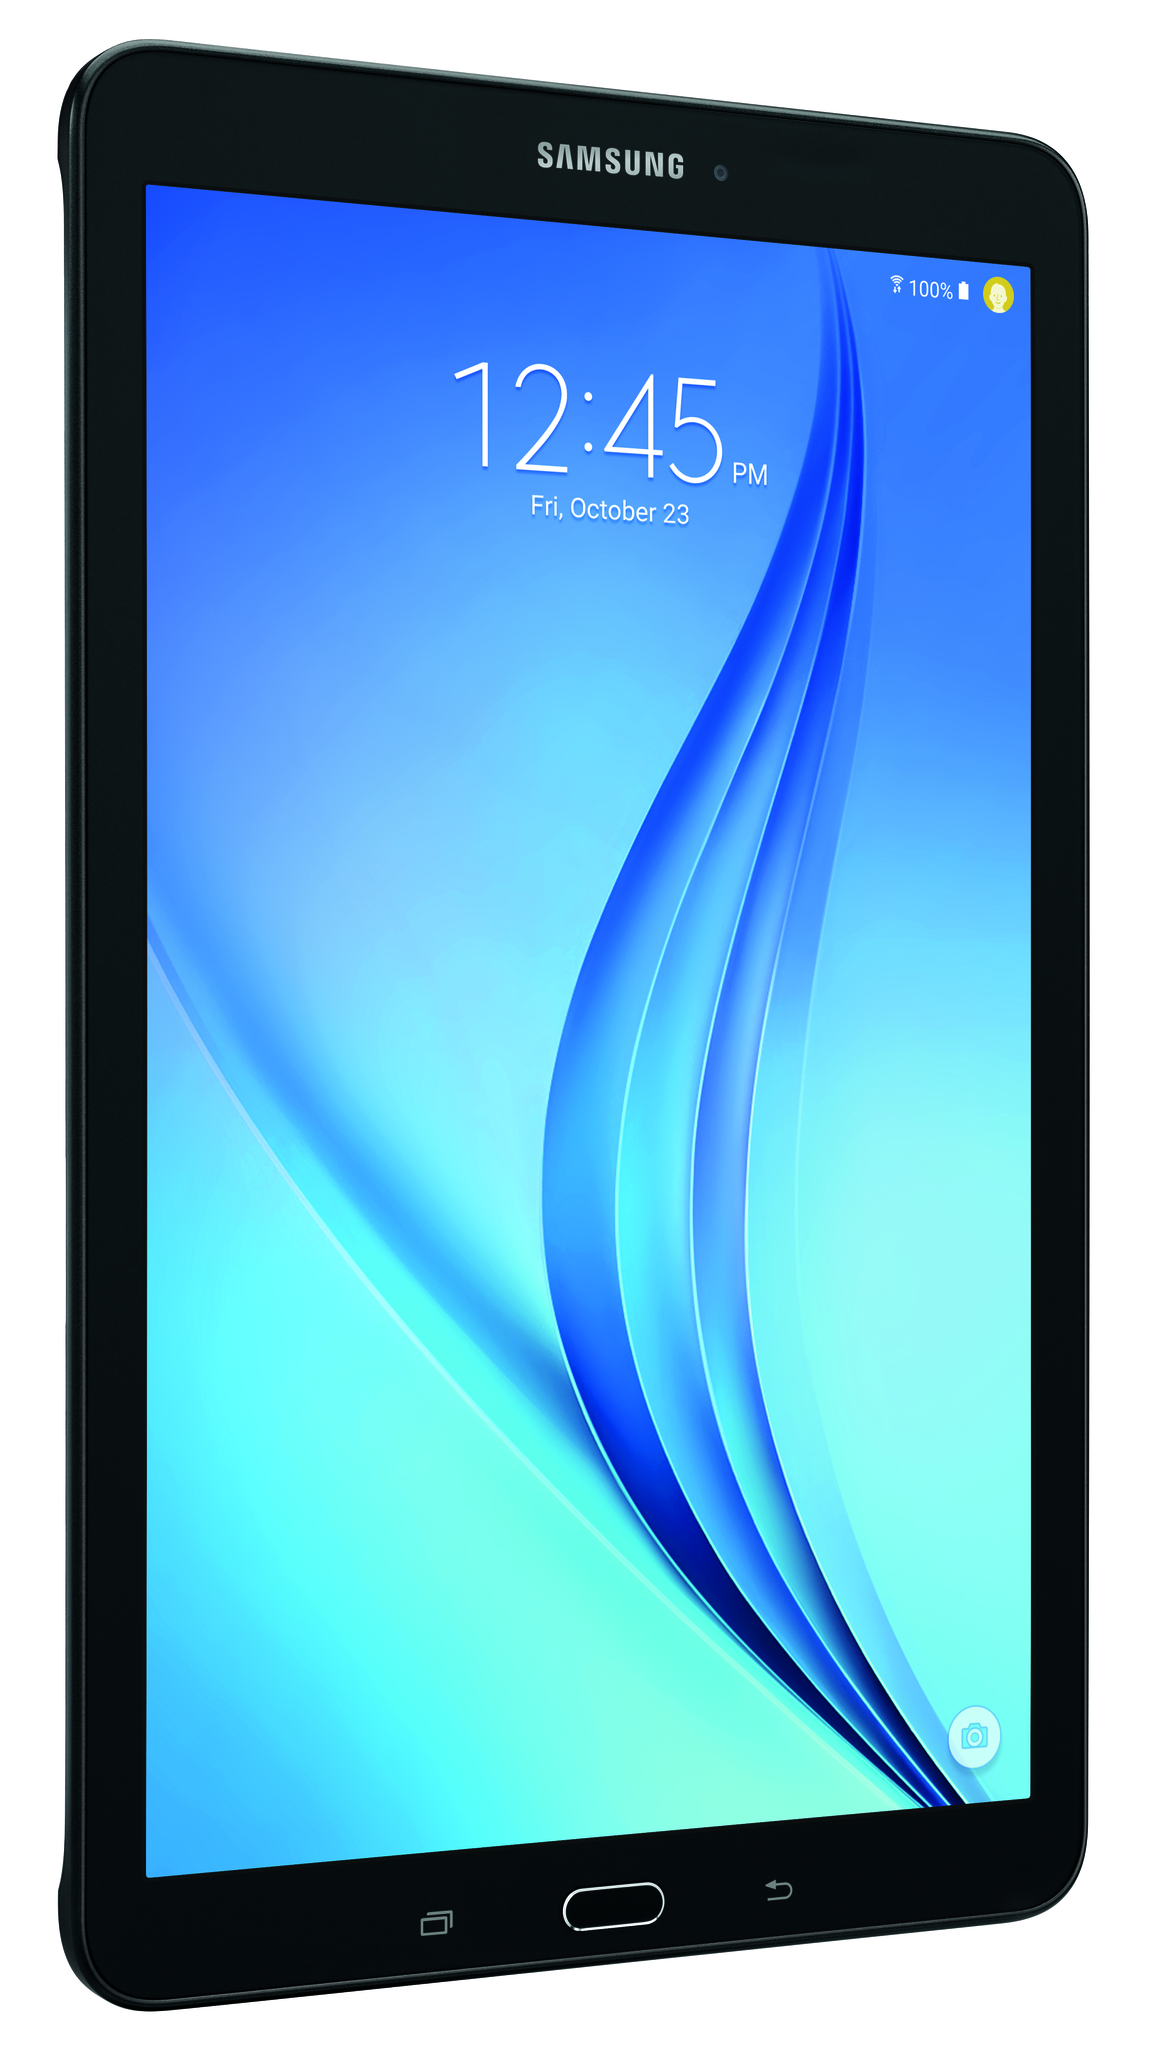 Samsung Galaxy Tab E 9.6 + $25 Google Play Card - image 2 of 9